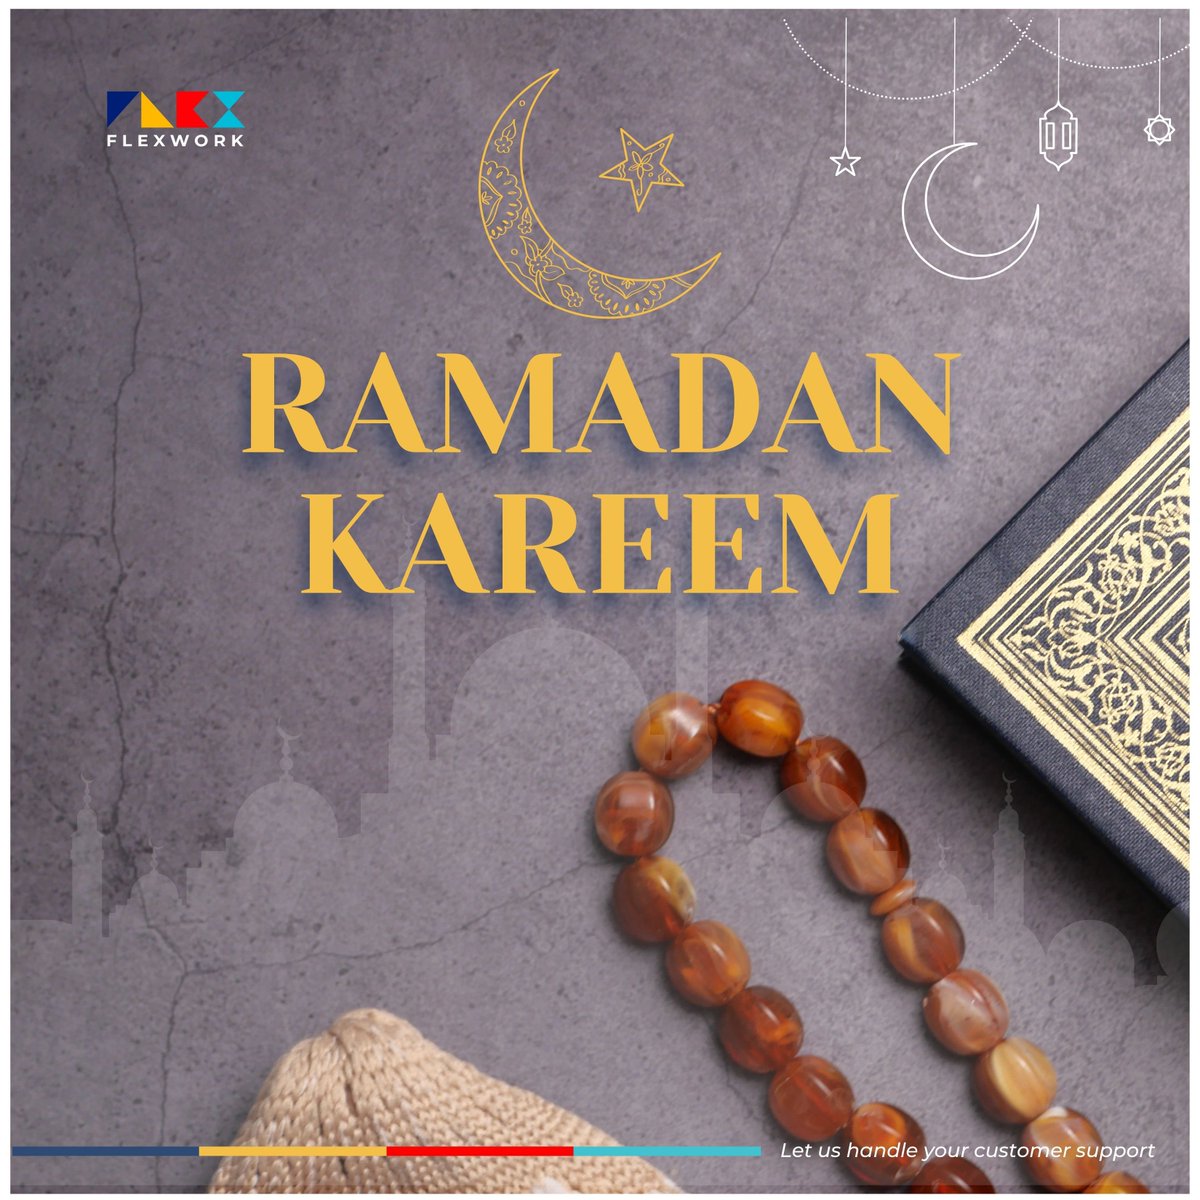 Welcome to the Holy Month of Ramadan. May we all experience serenity throughout this Ramadan. Ramadan Kareem! #Flexwork #CustomerSupport #CustomerService #SocialMedia #Canva #Ramadan #RamadanKareem2023